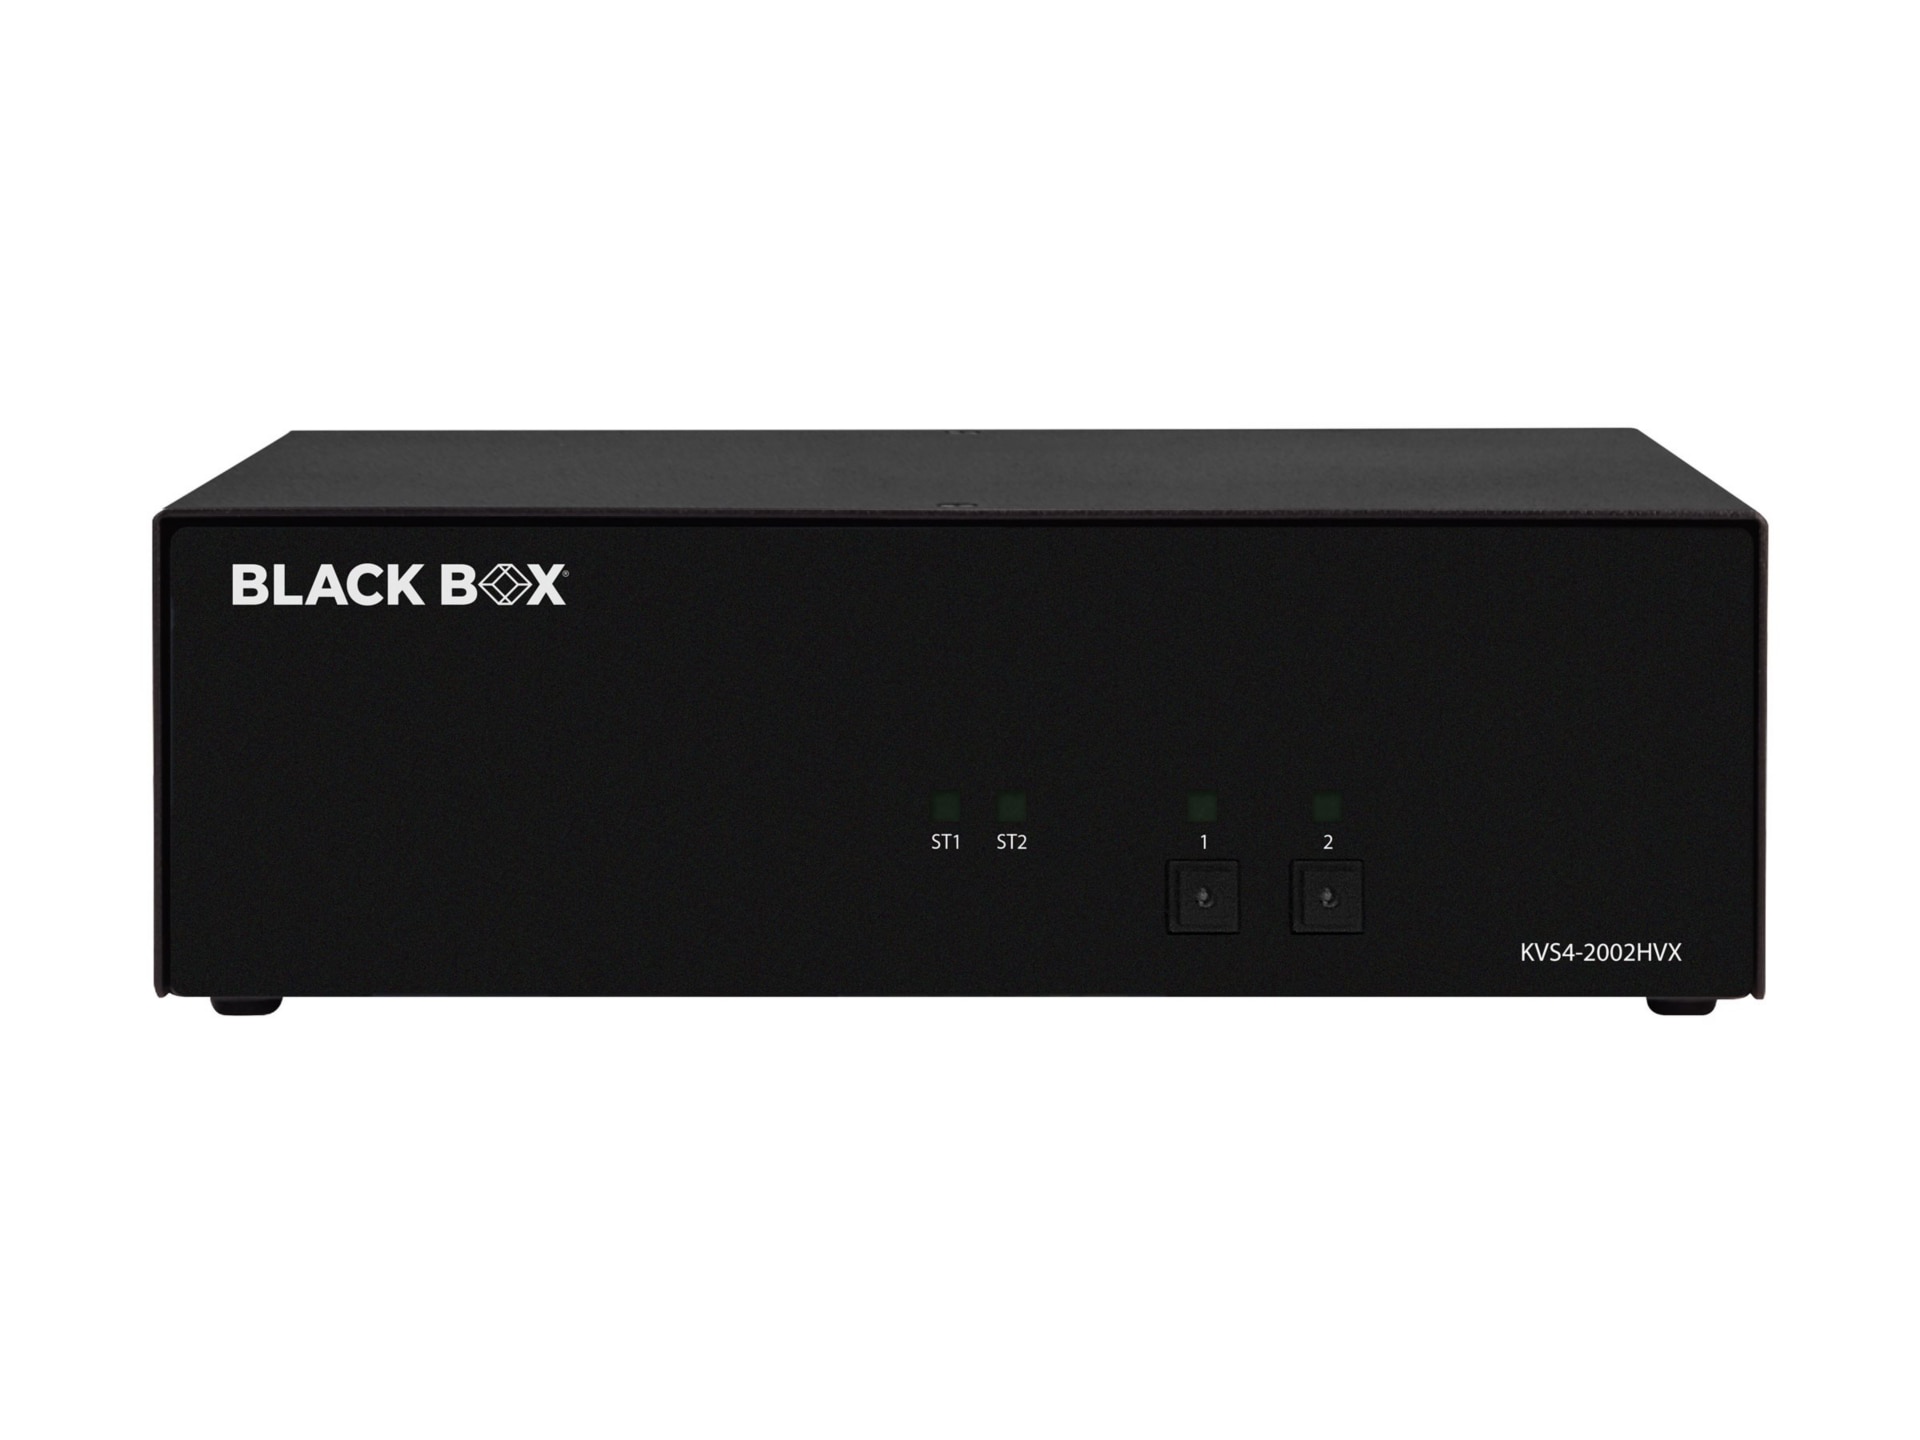 Black Box SECURE KVS4-2002HVX - KVM / audio switch - FlexPort HDMI/DisplayPort, Secure NIAP 4.0 certified - 2 ports -